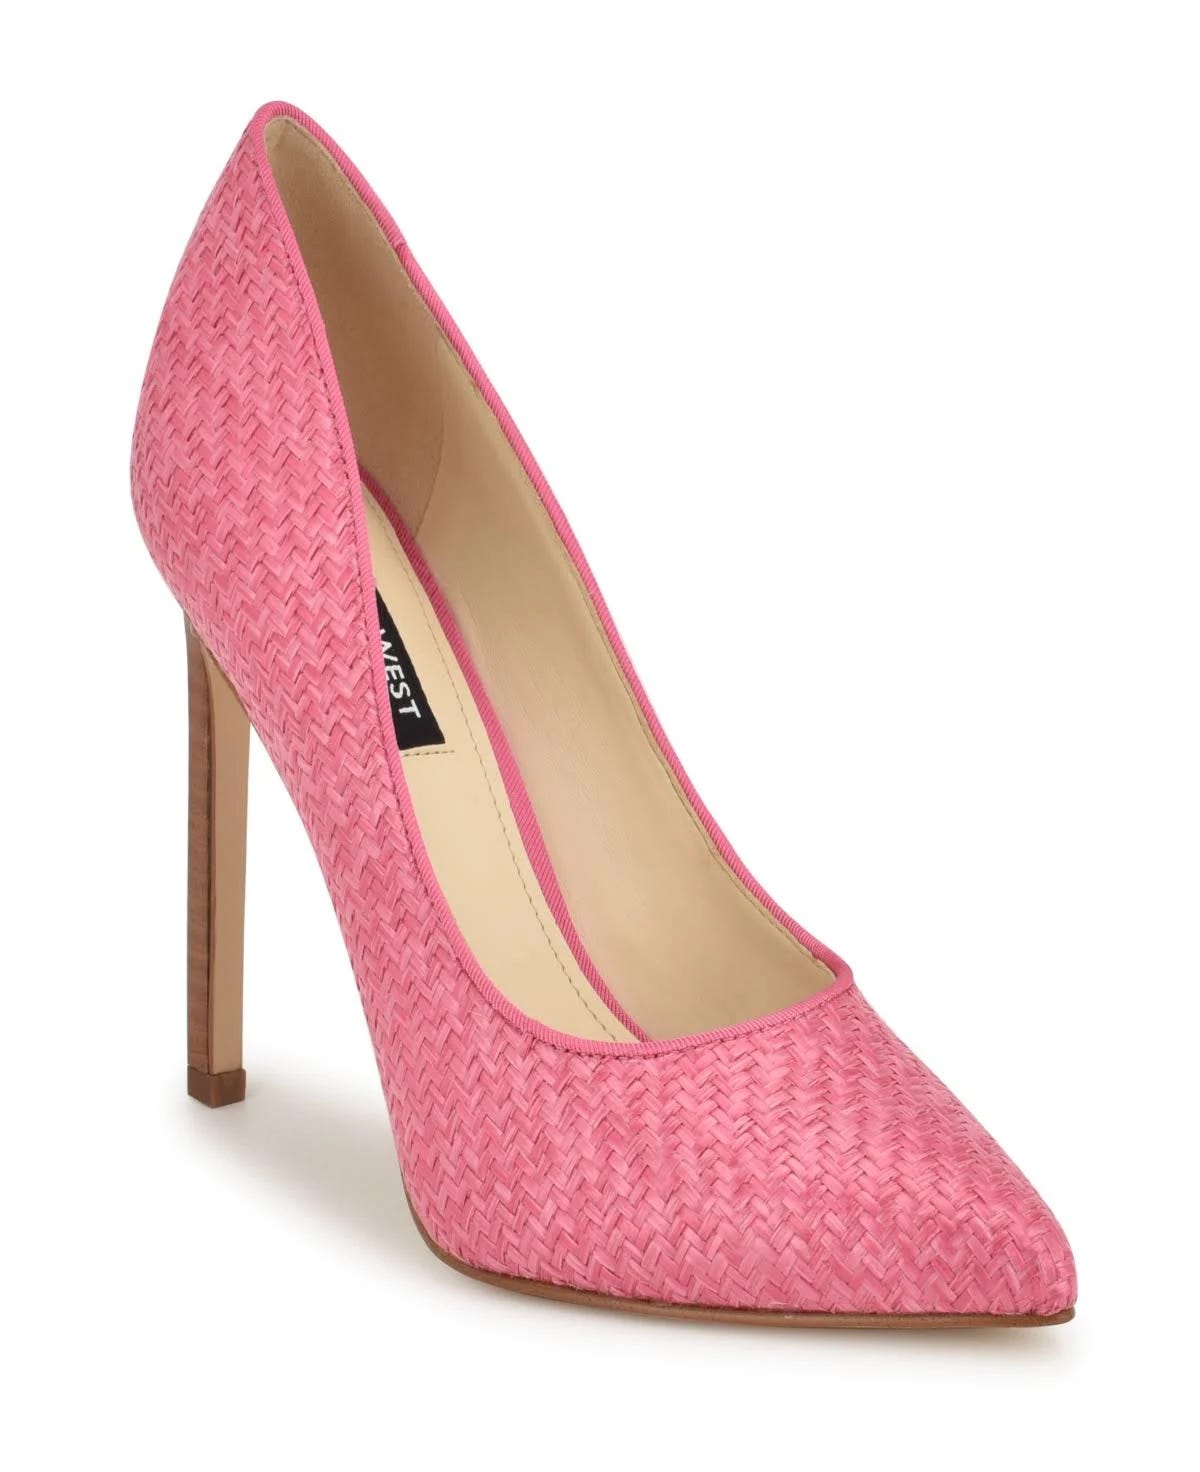 Stylish Pink Slip-On Heels by Nine West | Image